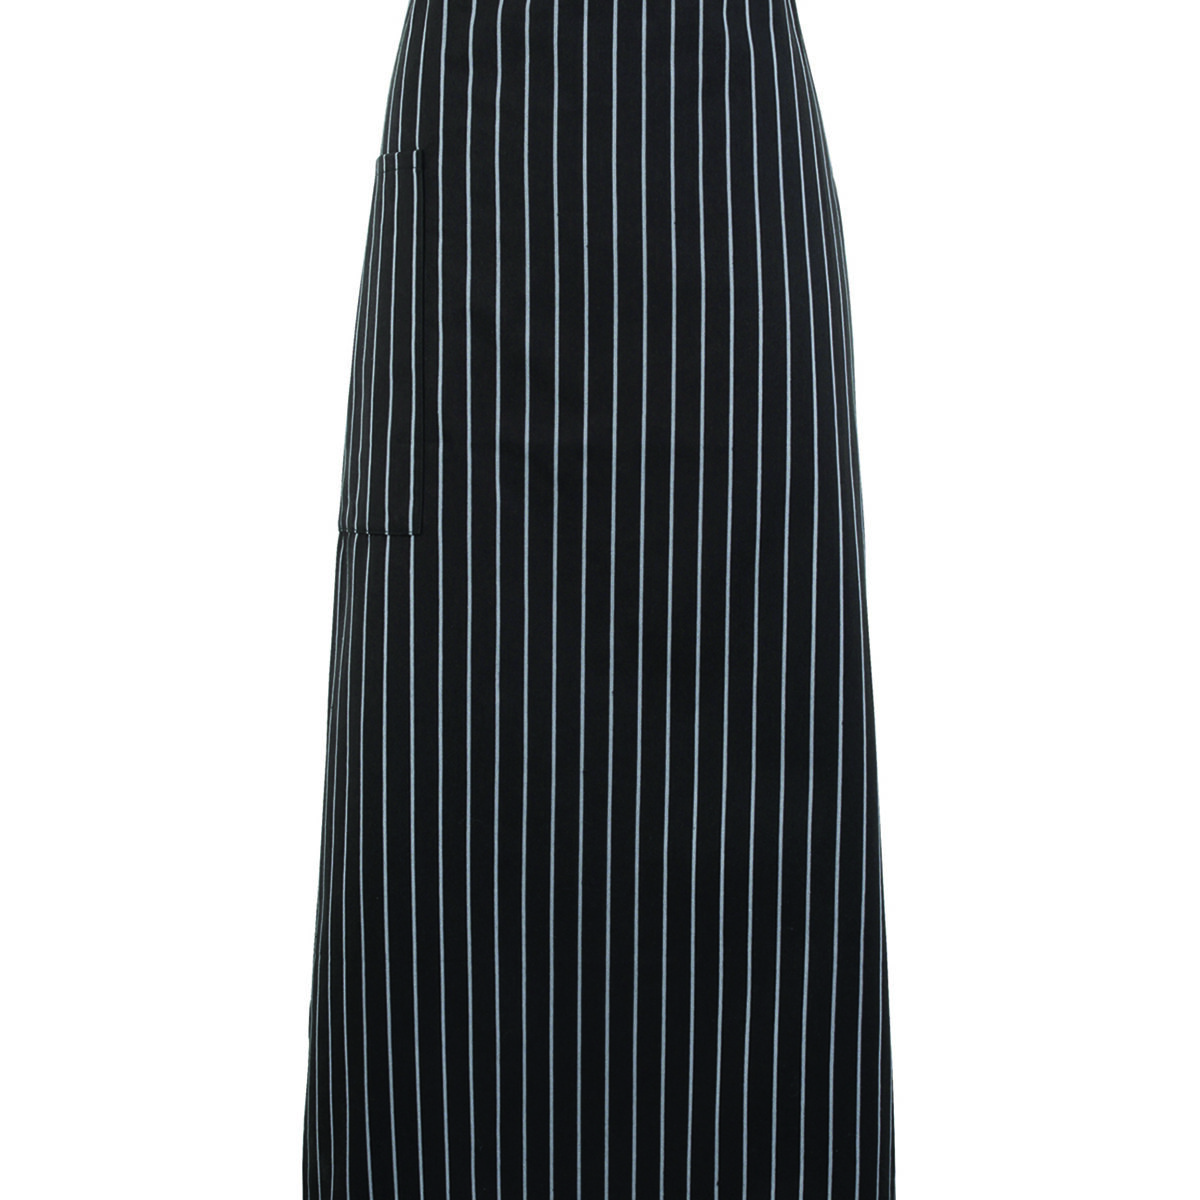 Gastronomy waist apron